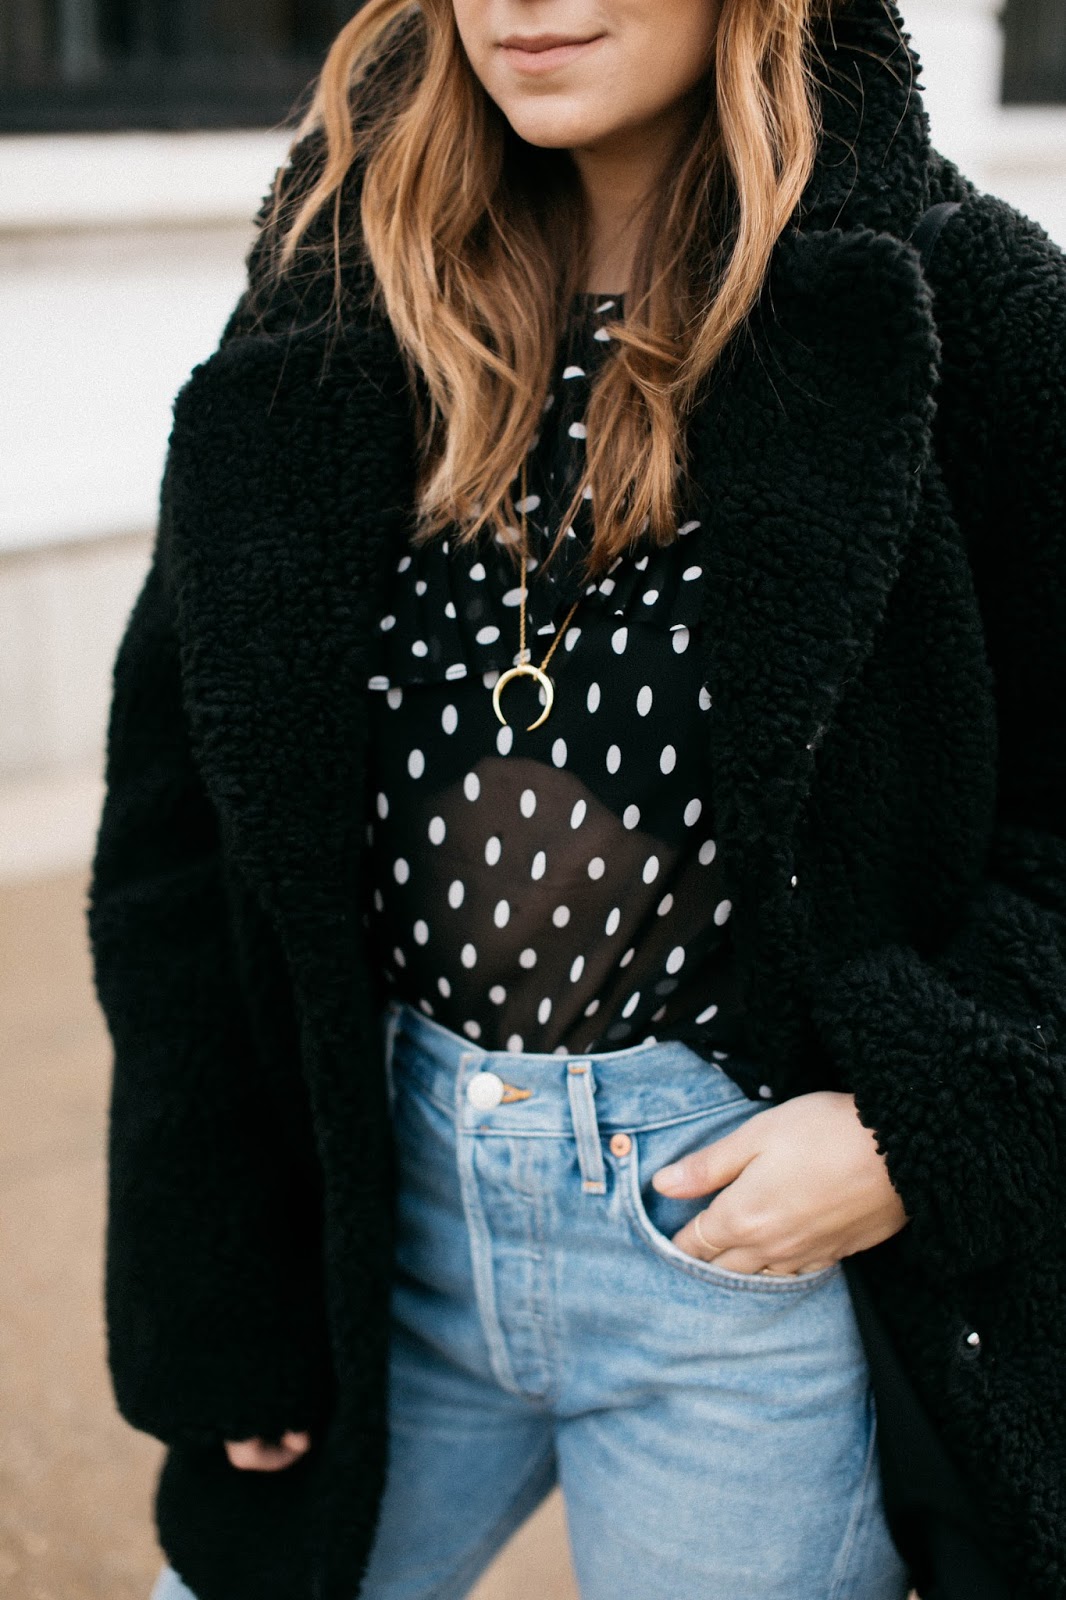 Perfect Polka Dots - The Fashionably Broke